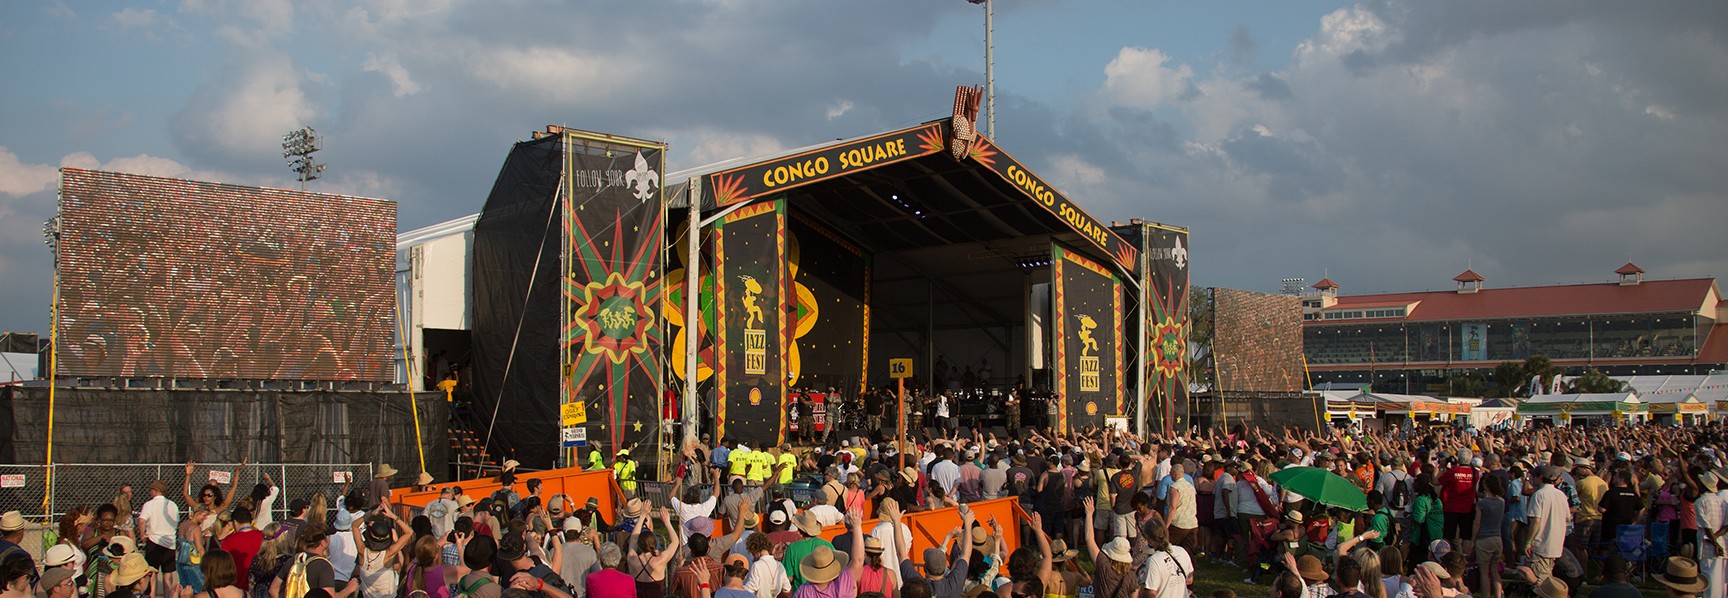 New Orleans Jazz & Heritage Festival Announces 2015 Programme